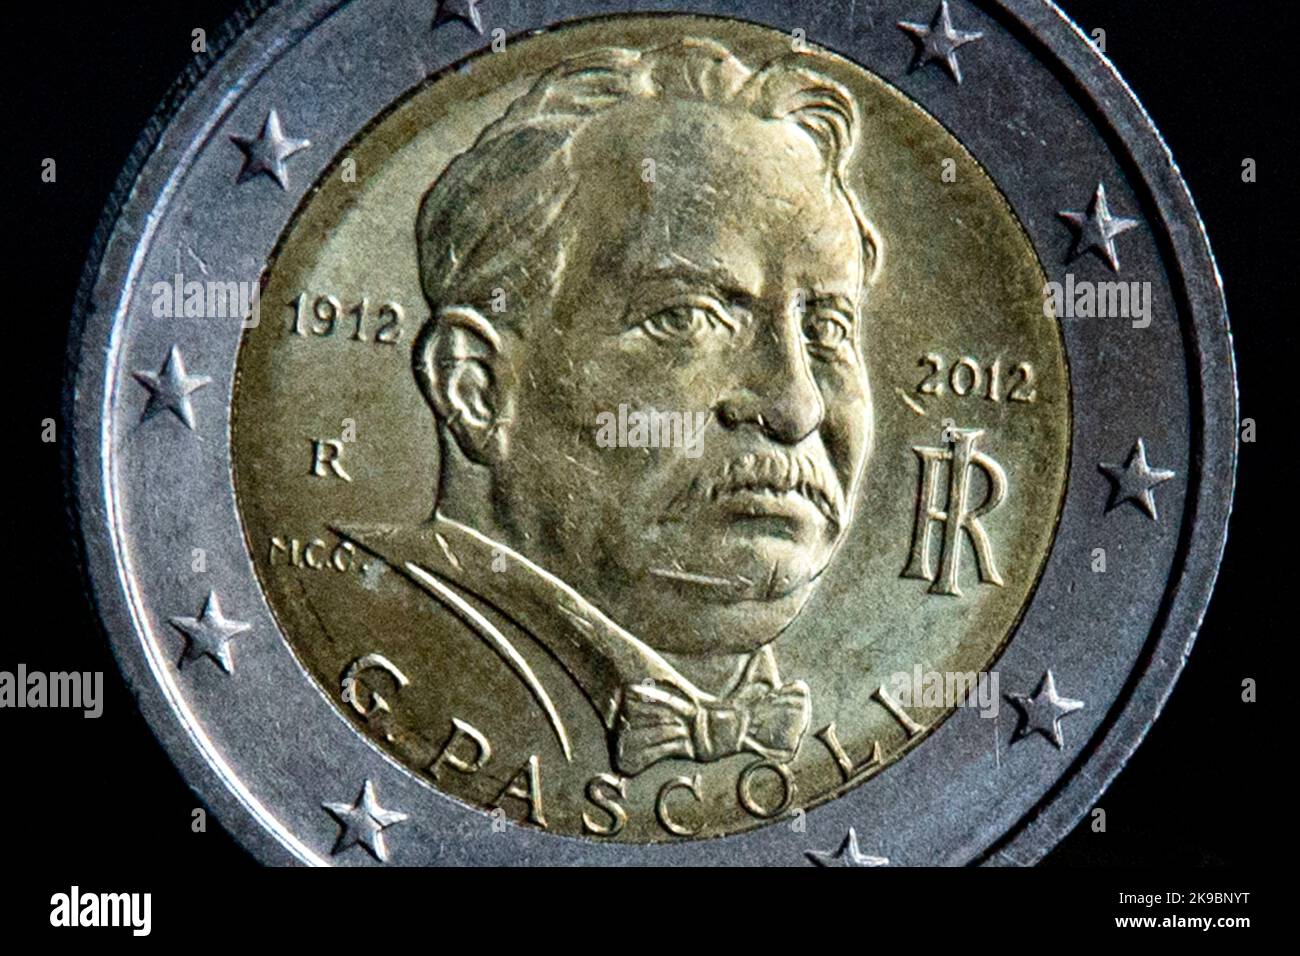 Moneda conmemorativa de dos euros fotografías e imágenes de alta resolución  - Alamy